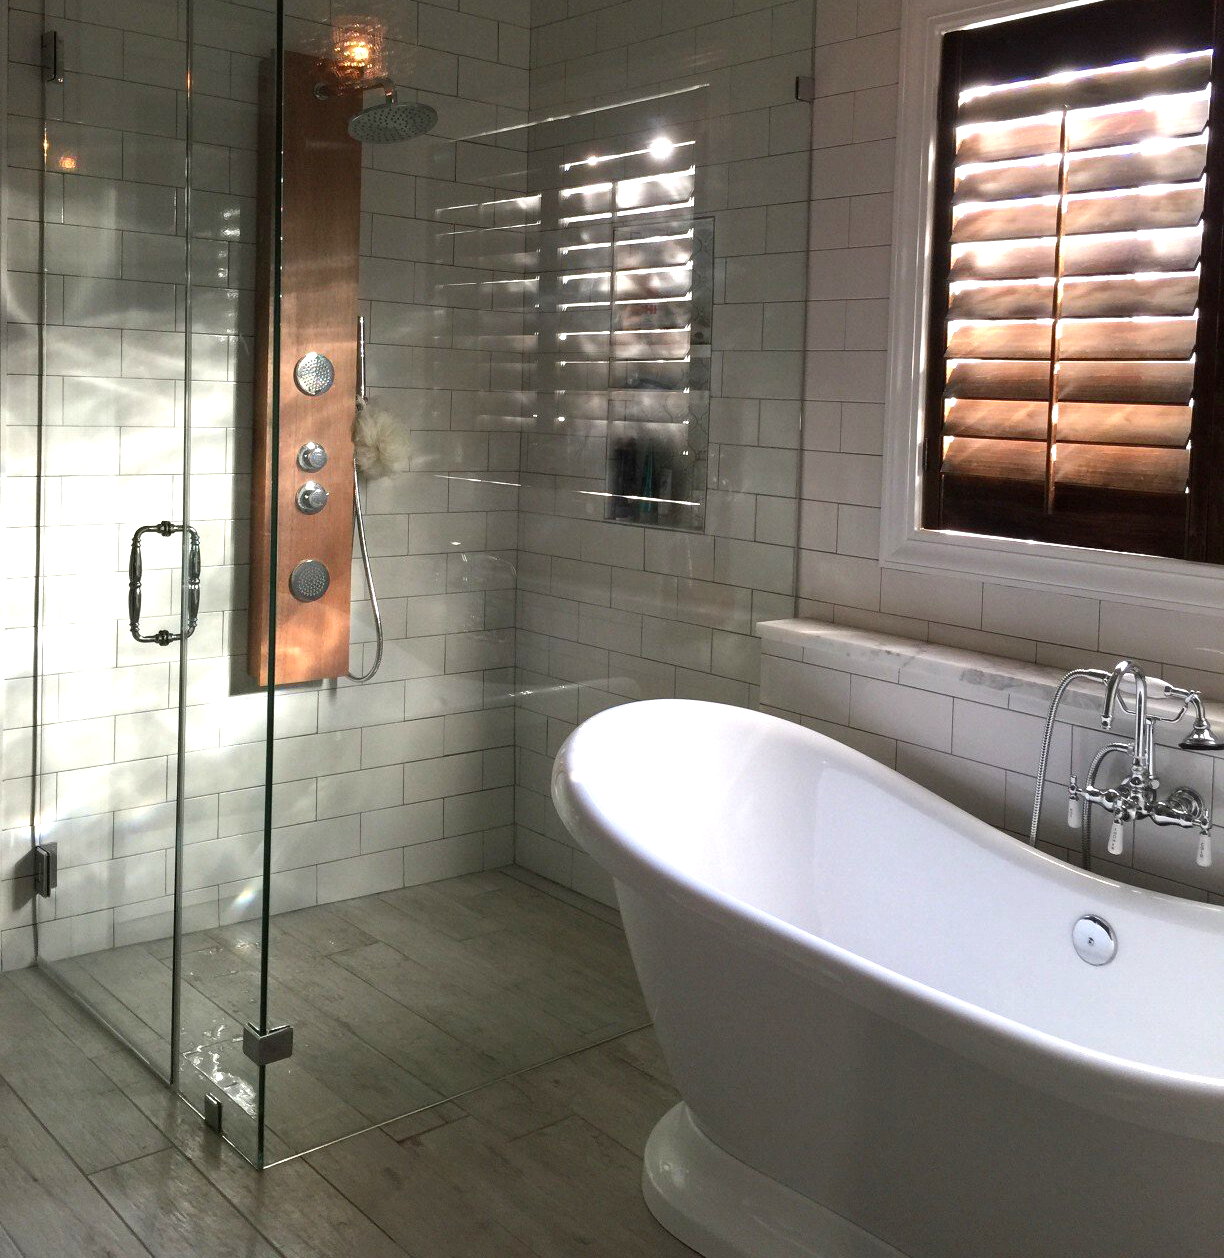 Kalamazoo bathroom remodel tub and shower